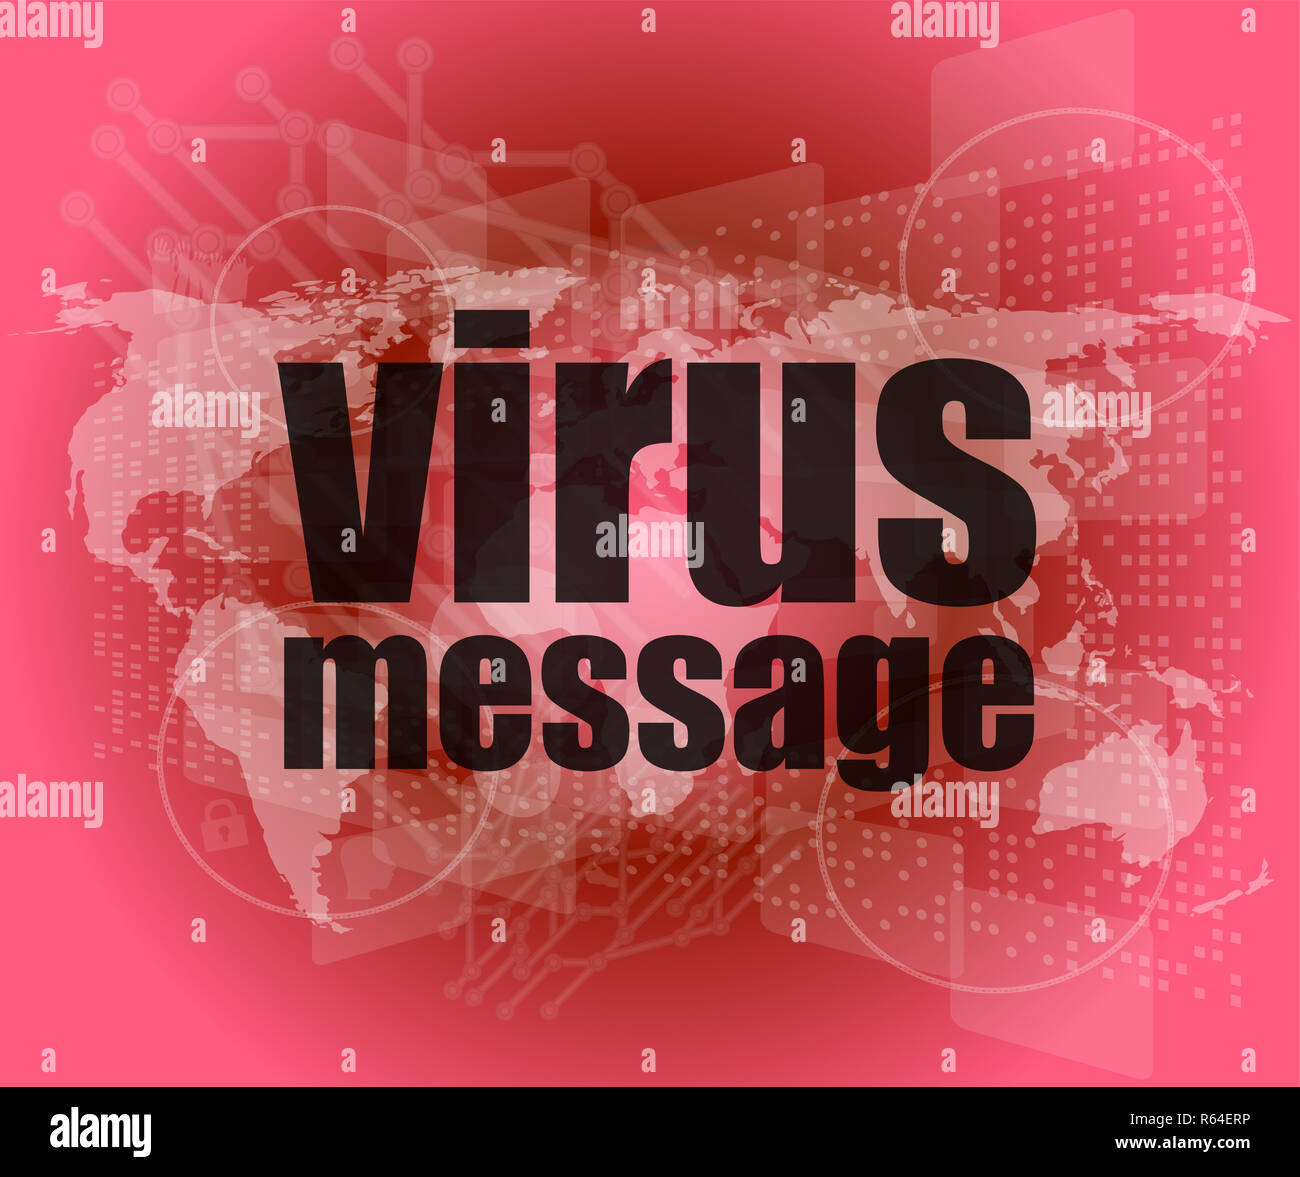 internet concept: words virus message on digital screen Stock Photo